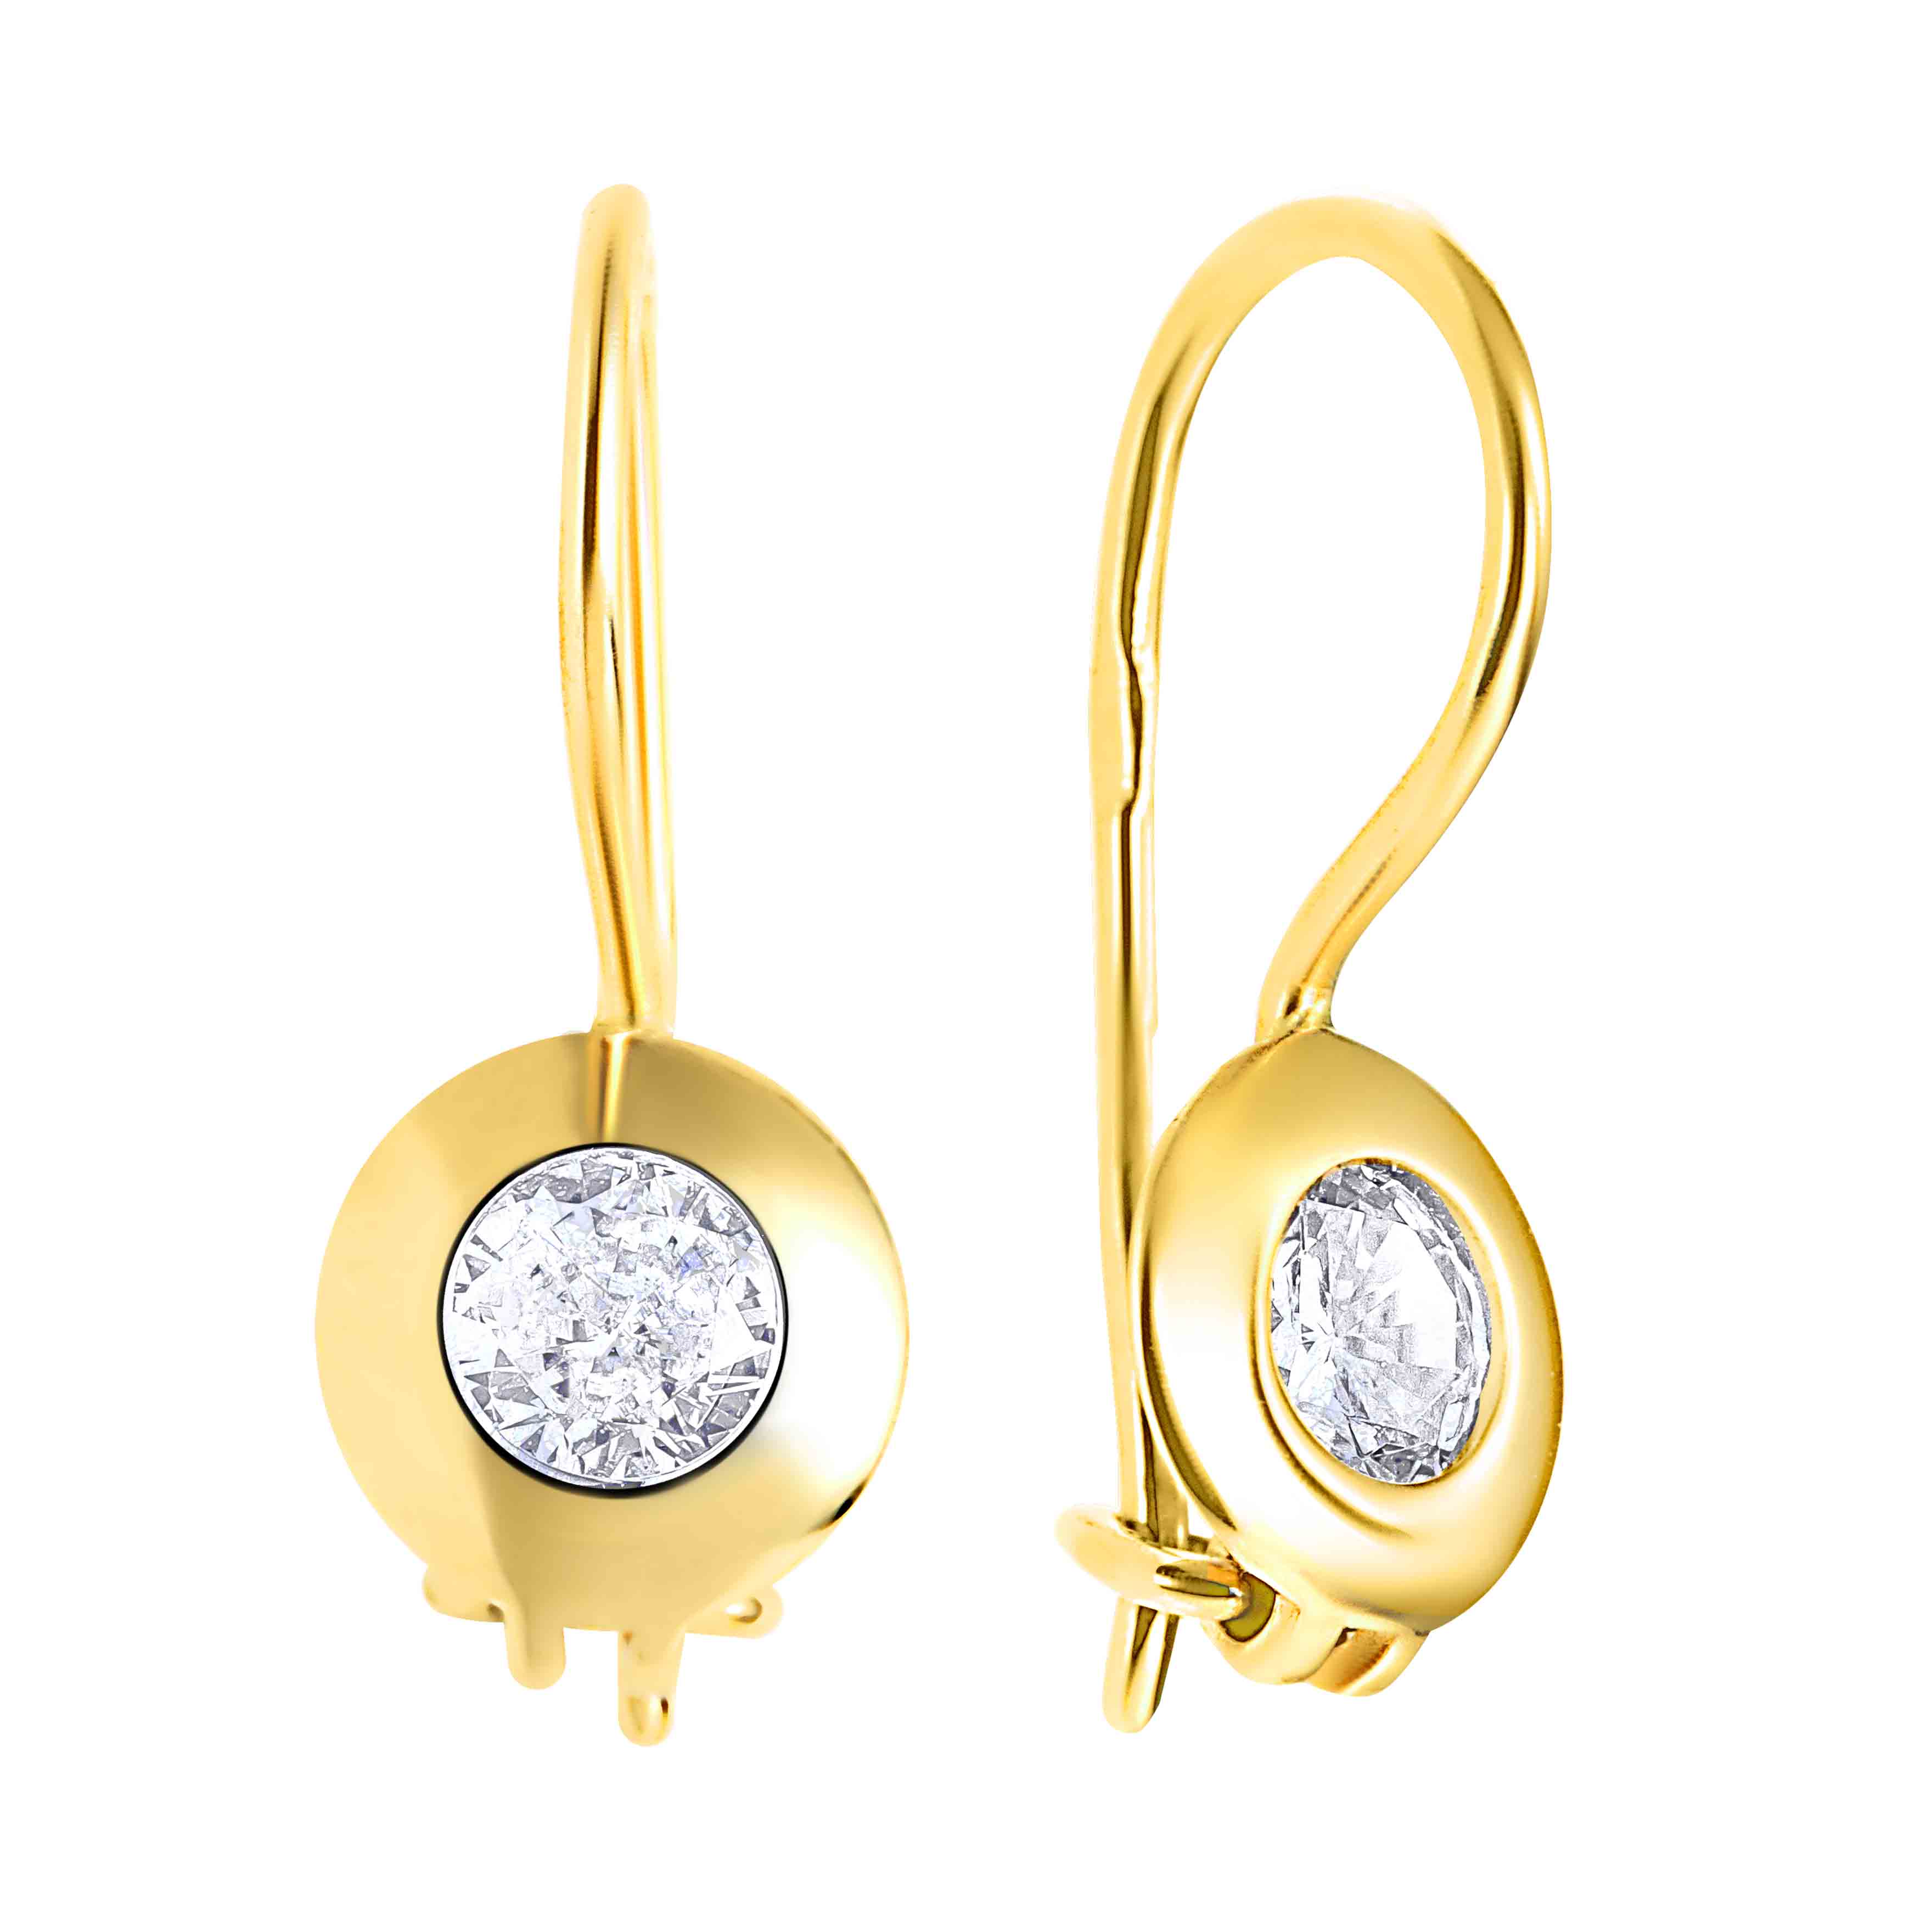 22 kt 3.80 GM Gold Hoop Earrings | Gold Jewelry Store | Shop Now